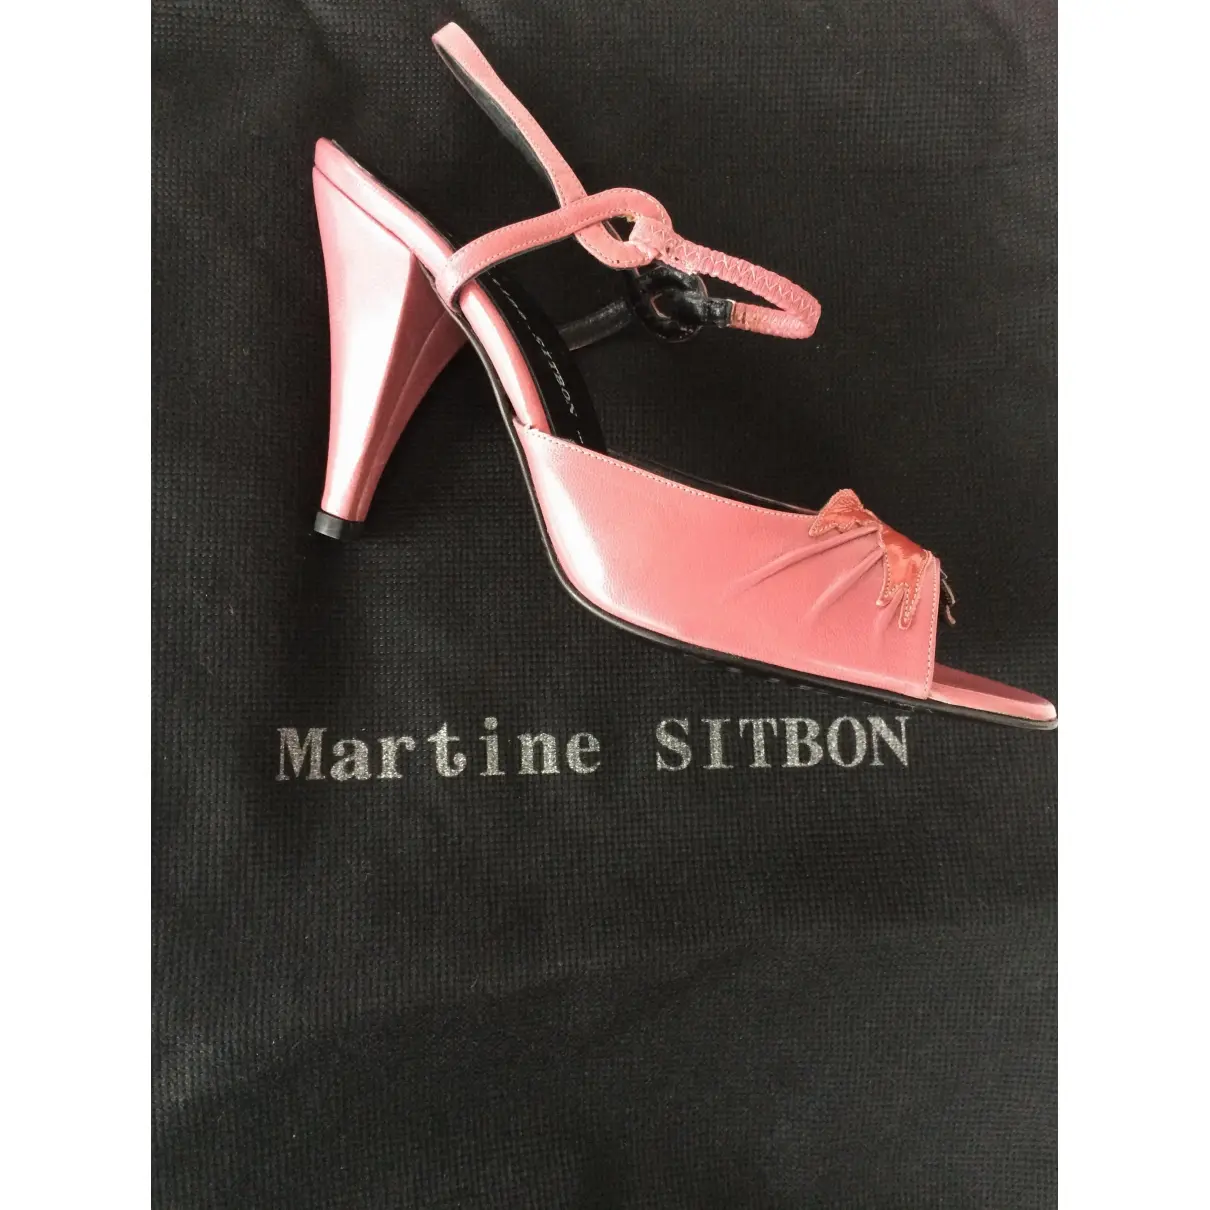 Martine Sitbon Heels for sale